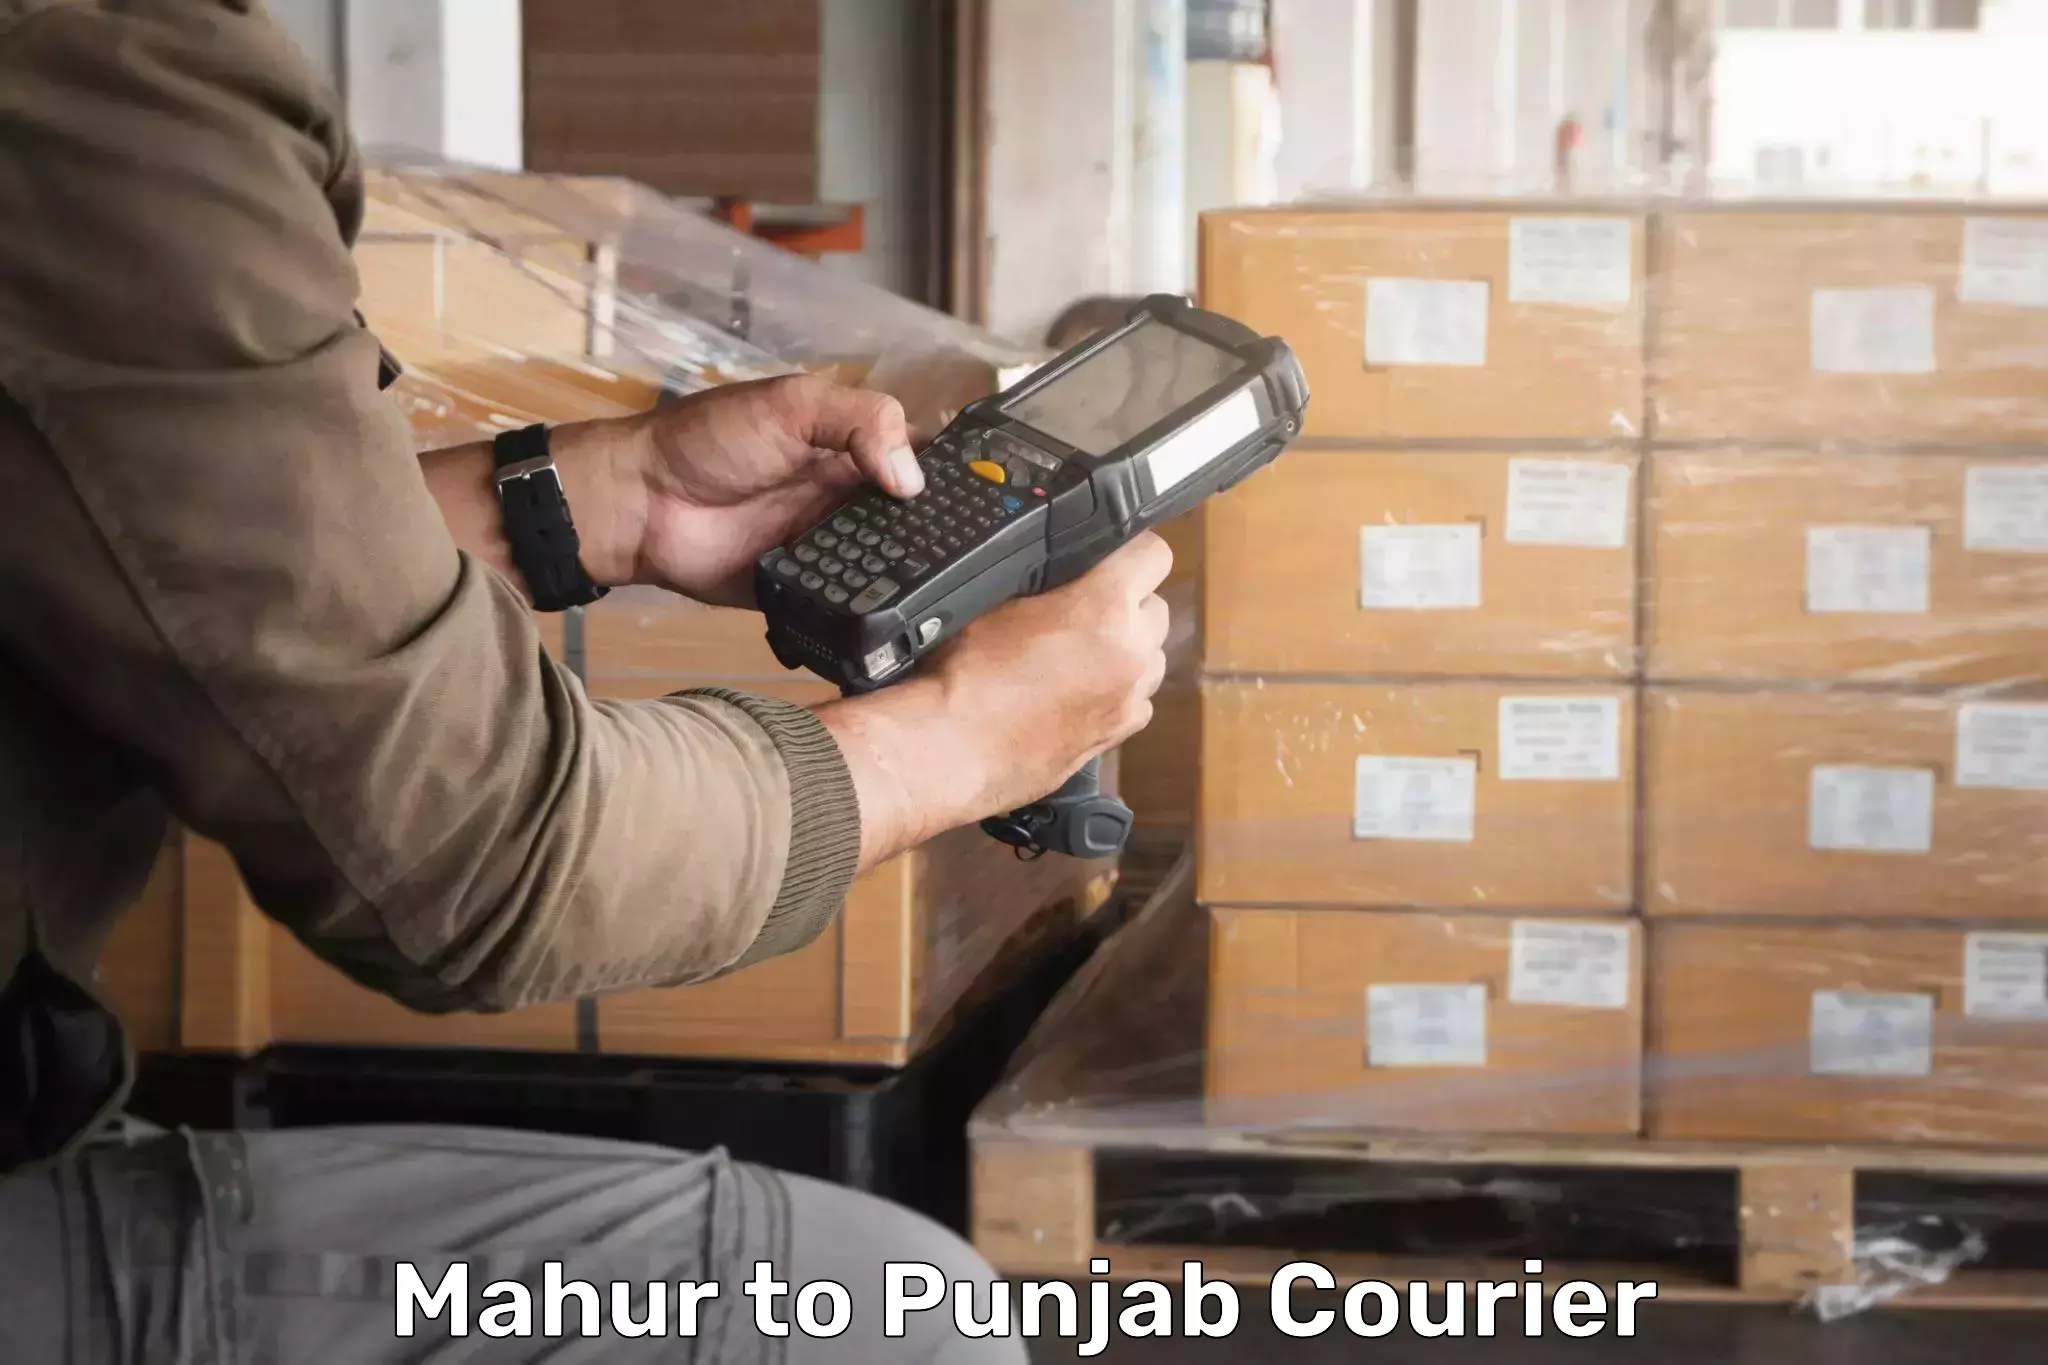 Courier app Mahur to Faridkot